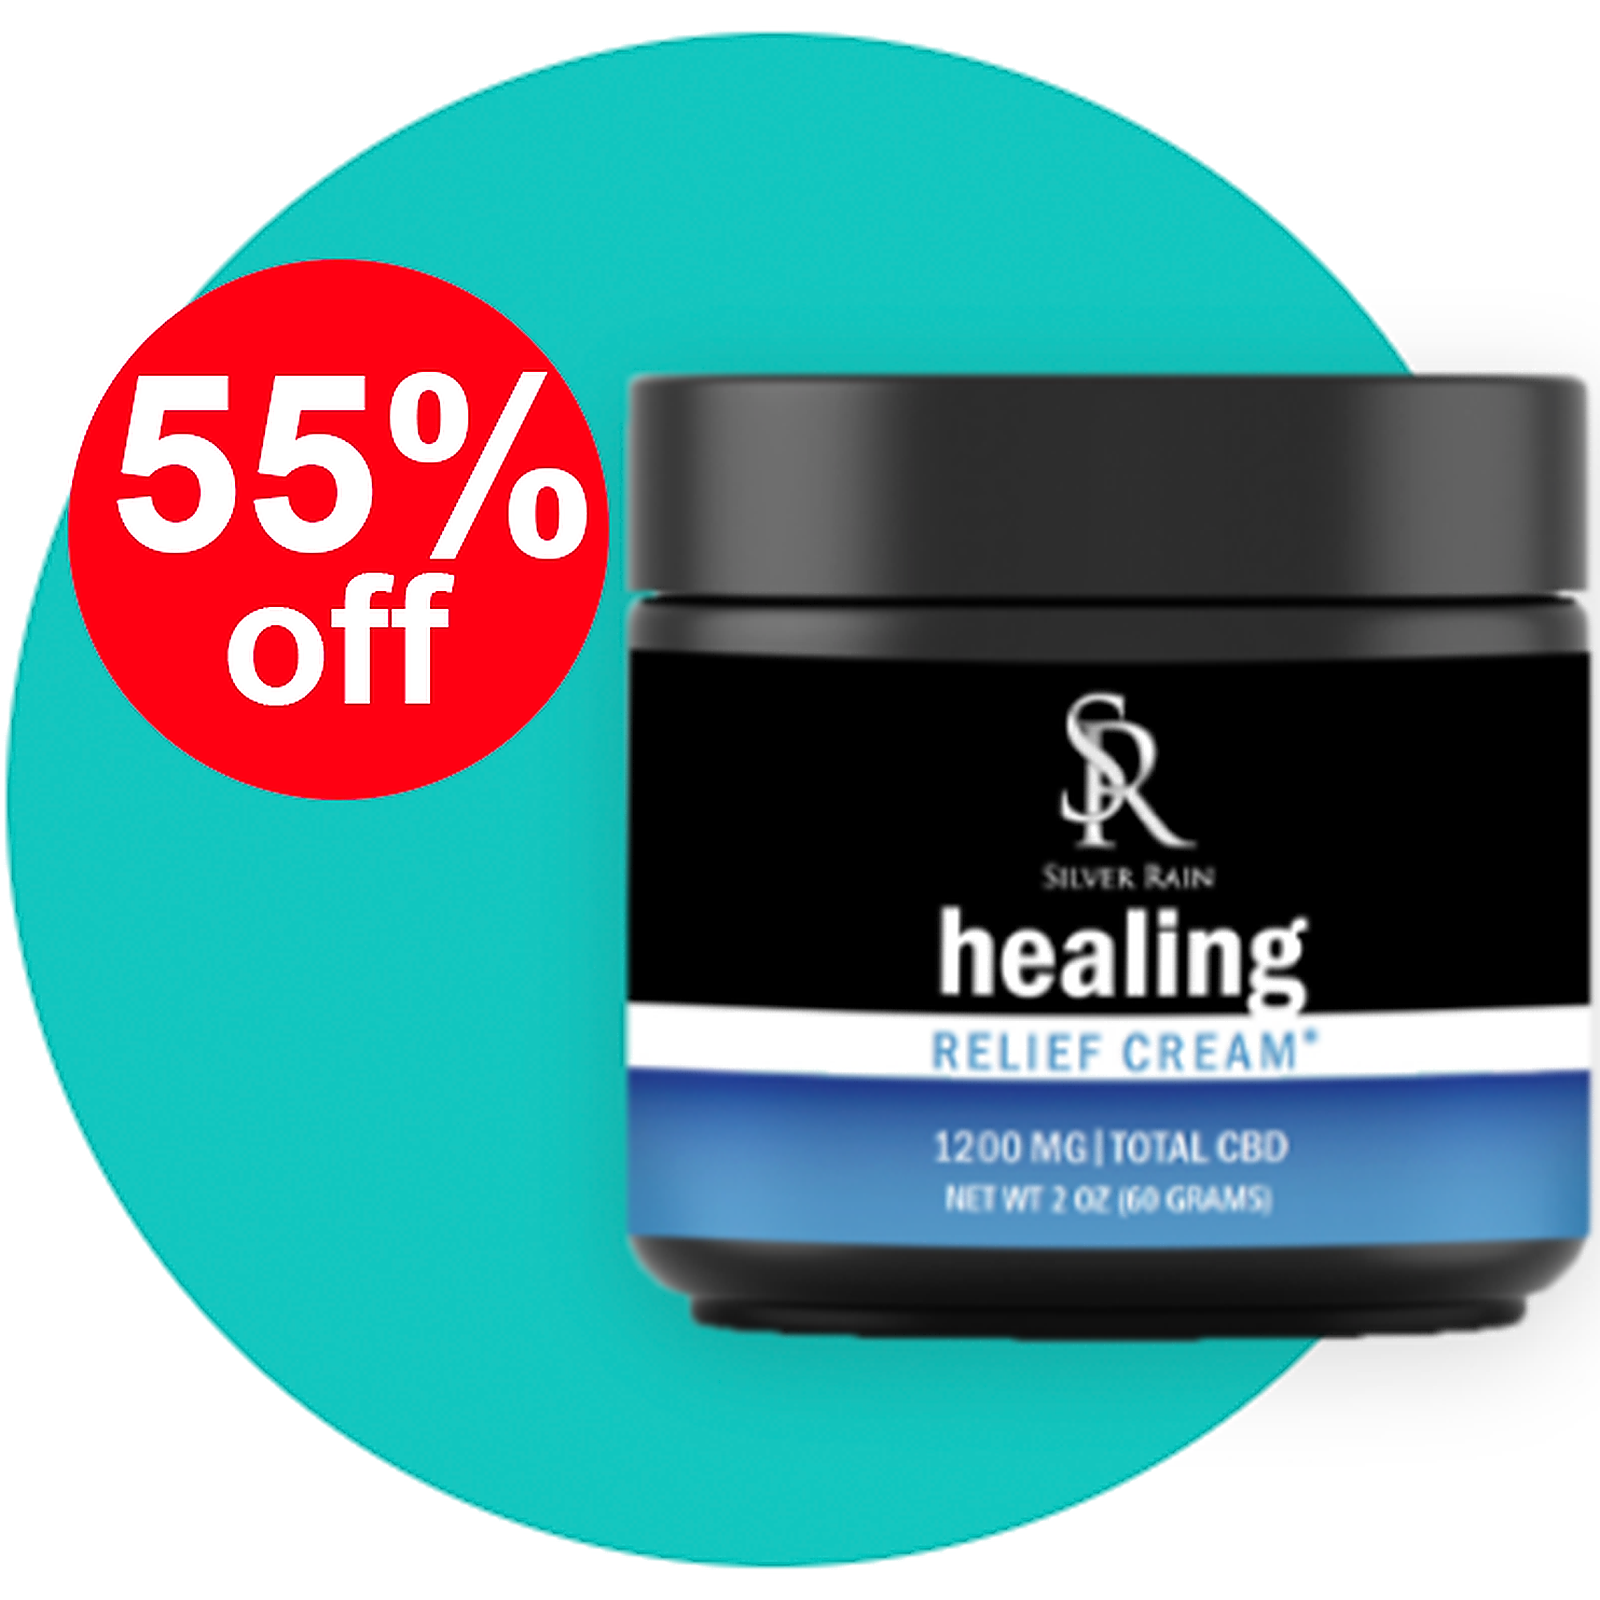 Healing Relief CBD Cream - 55% off March special